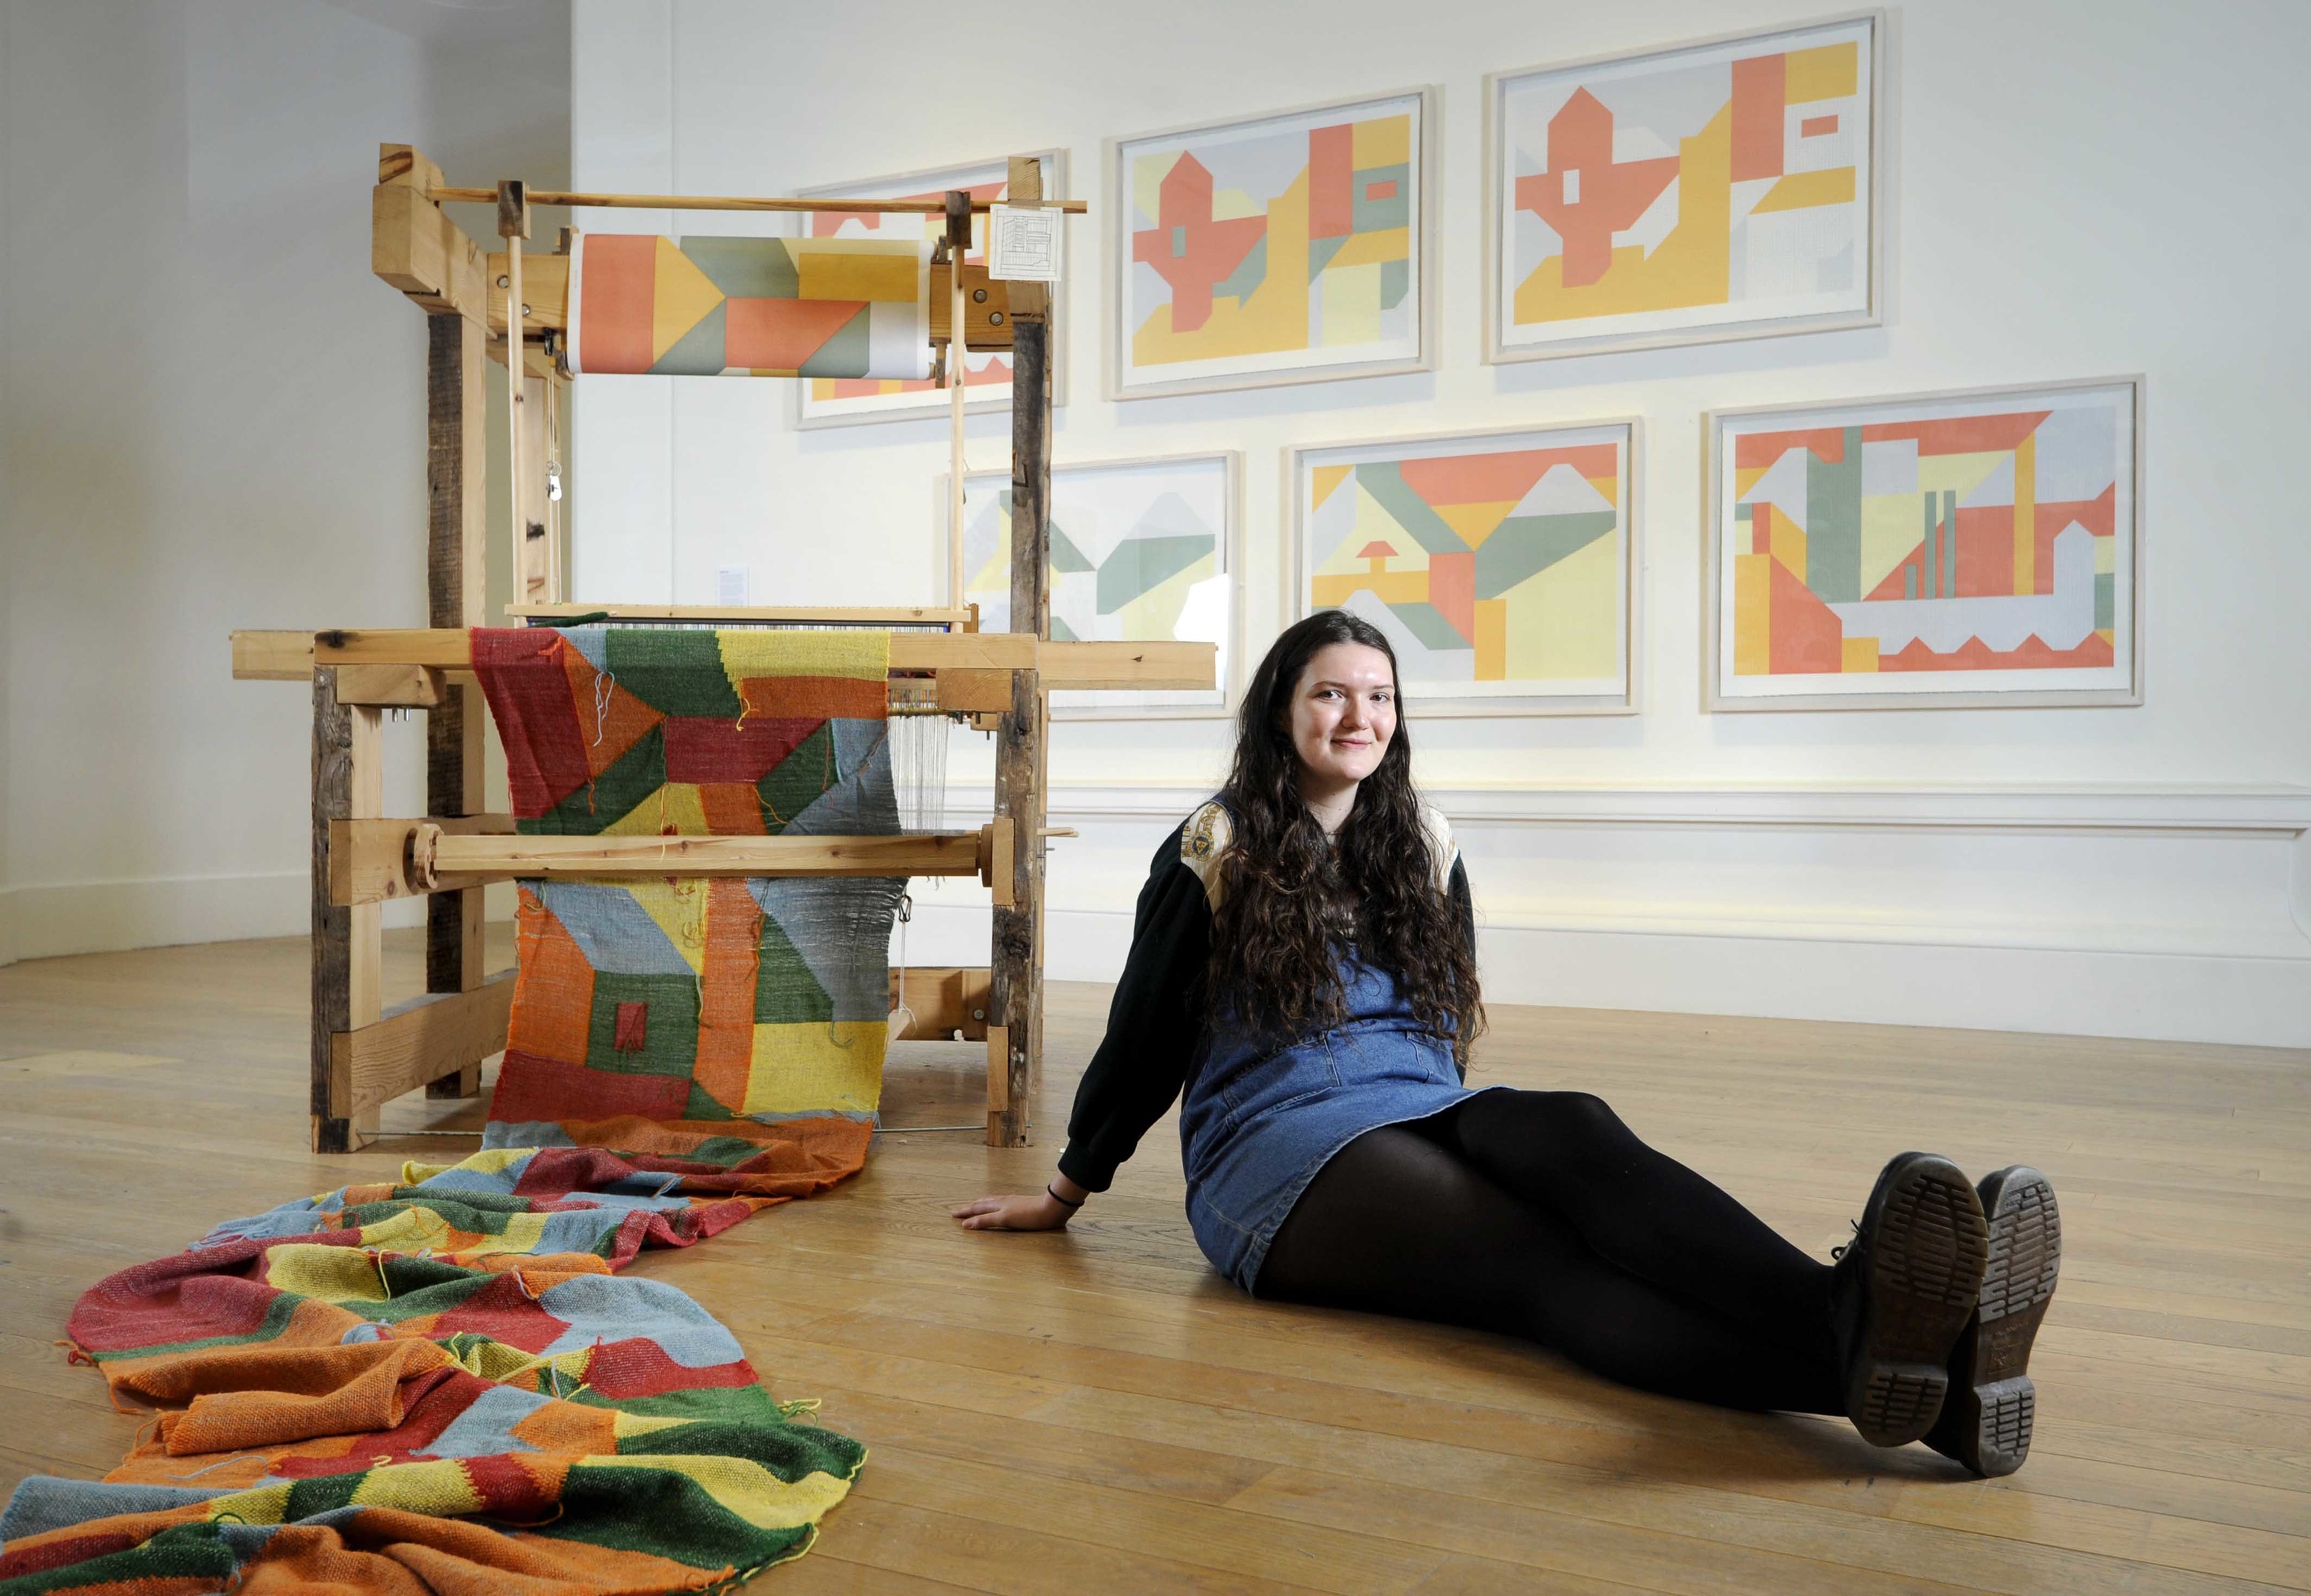 Rhona Grant has won a three-month artist residency at Glenfiddich Distillery.